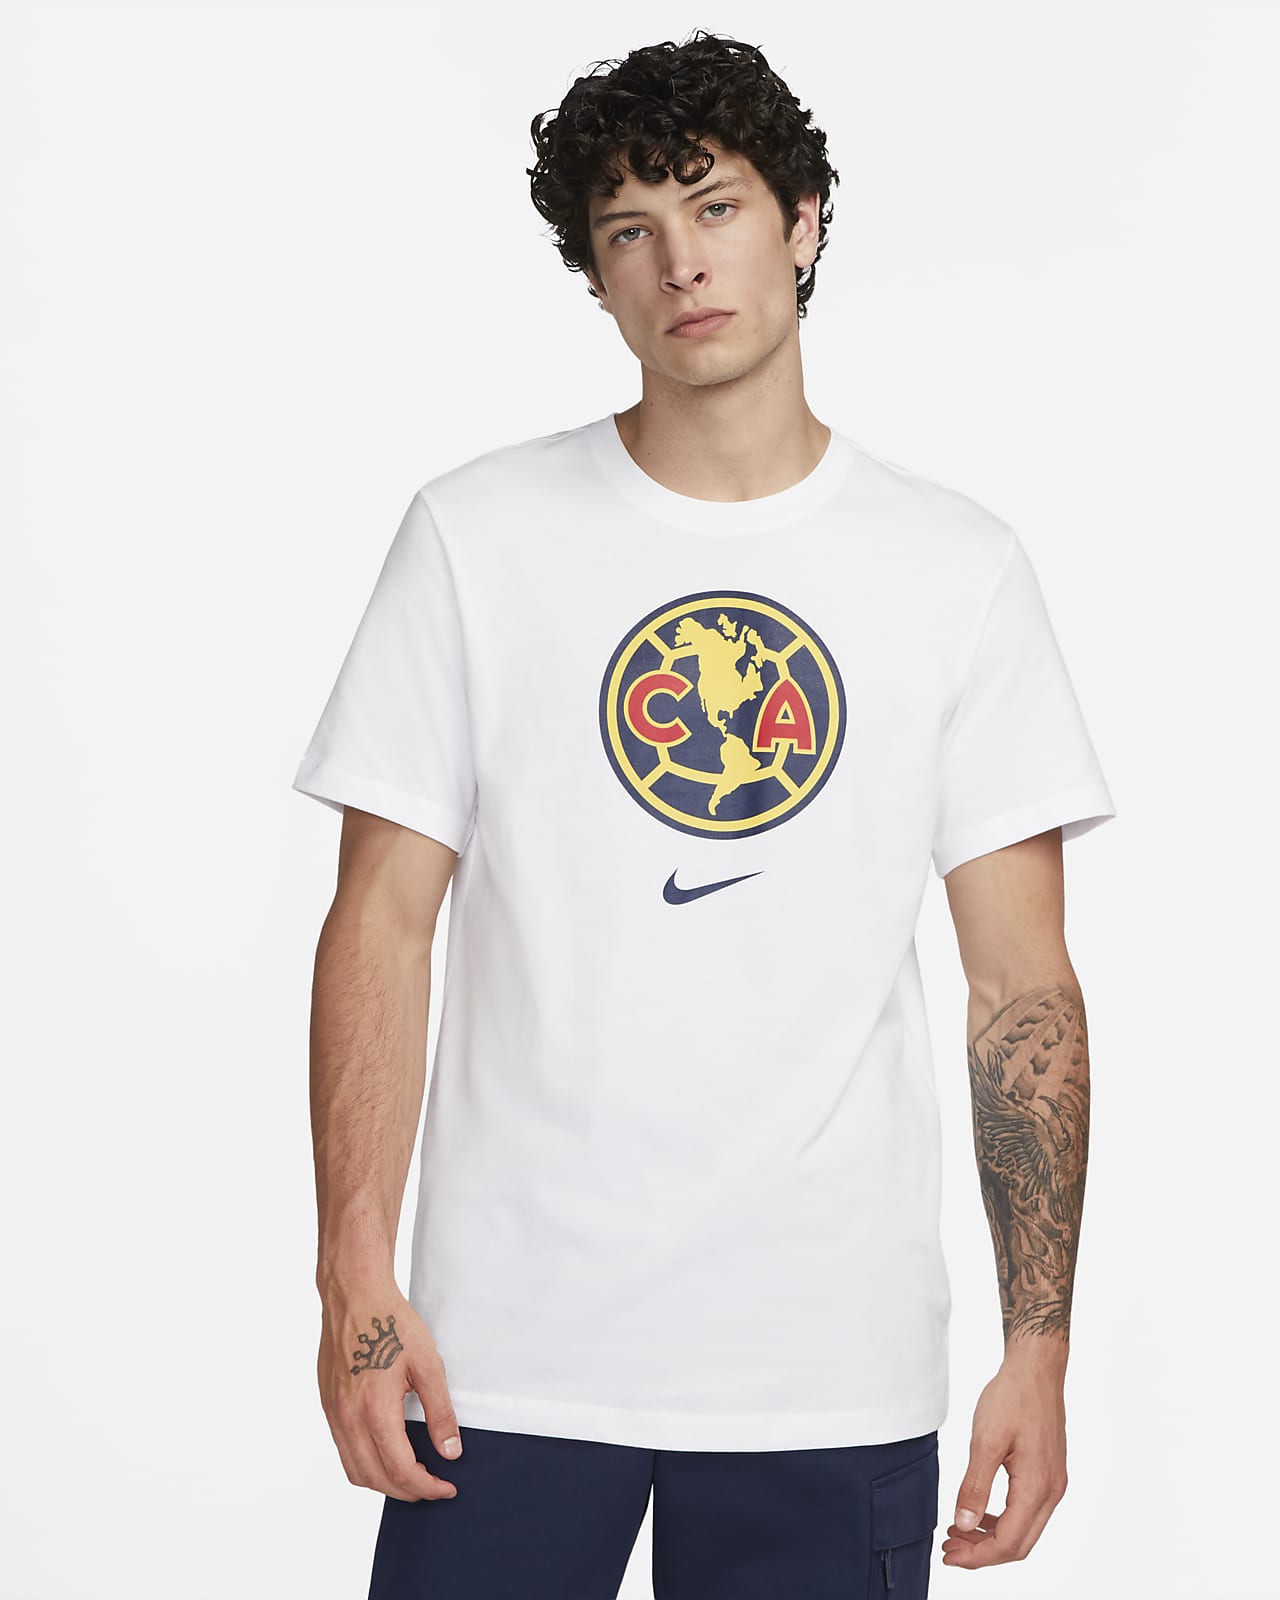 Club América Crest Men's Nike T-Shirt